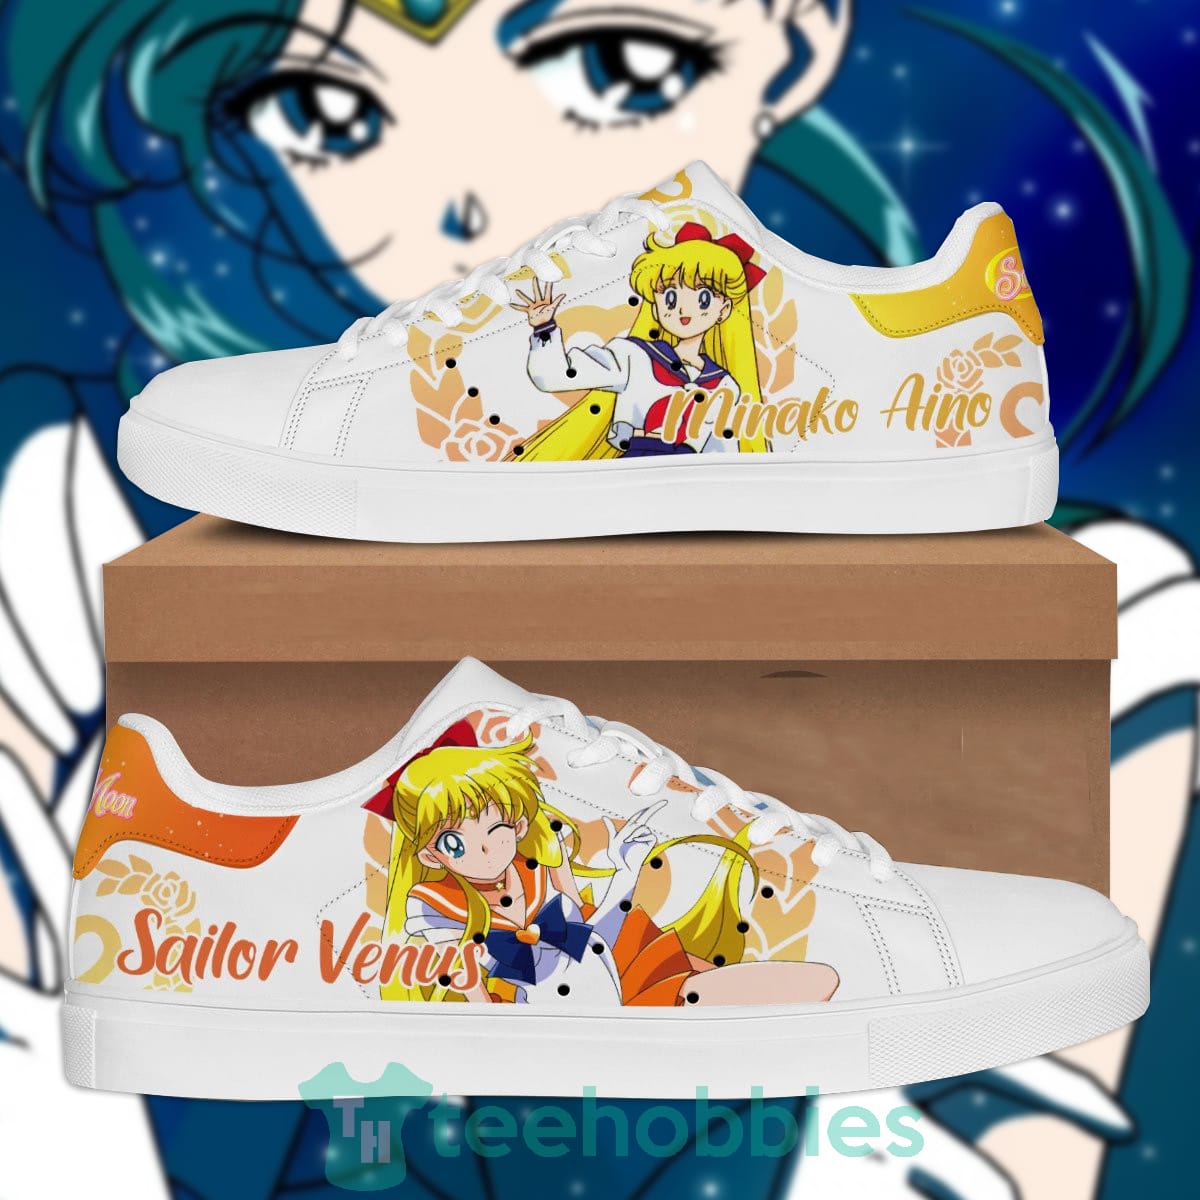 Venus Sailor Moon Anime Lover Skate Shoes For Fans